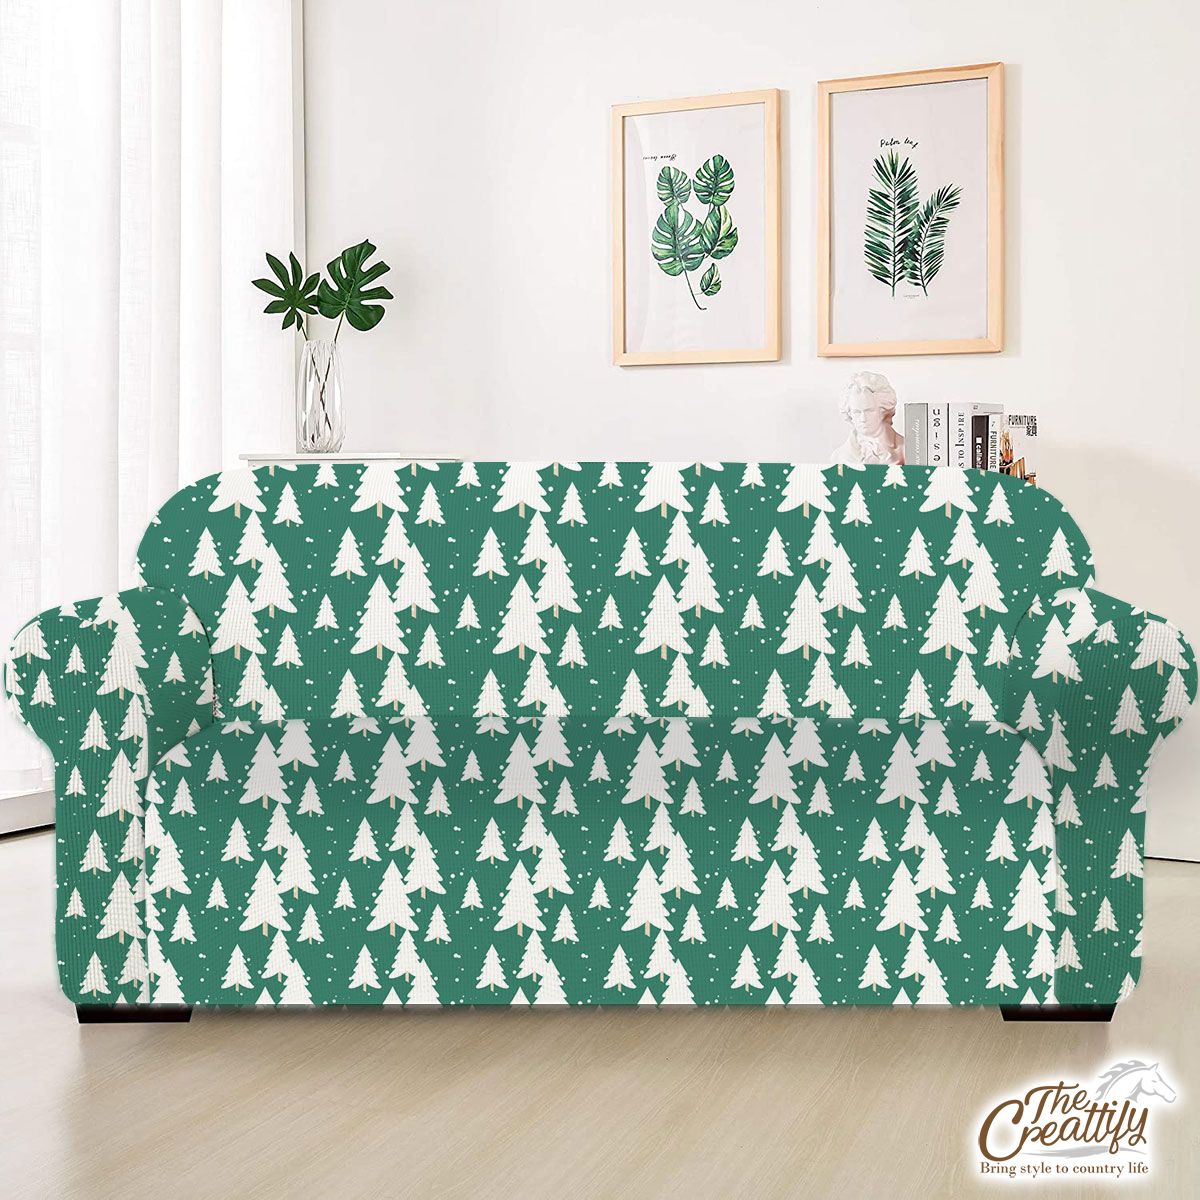 Green And White Christmas Tree Sofa Cover